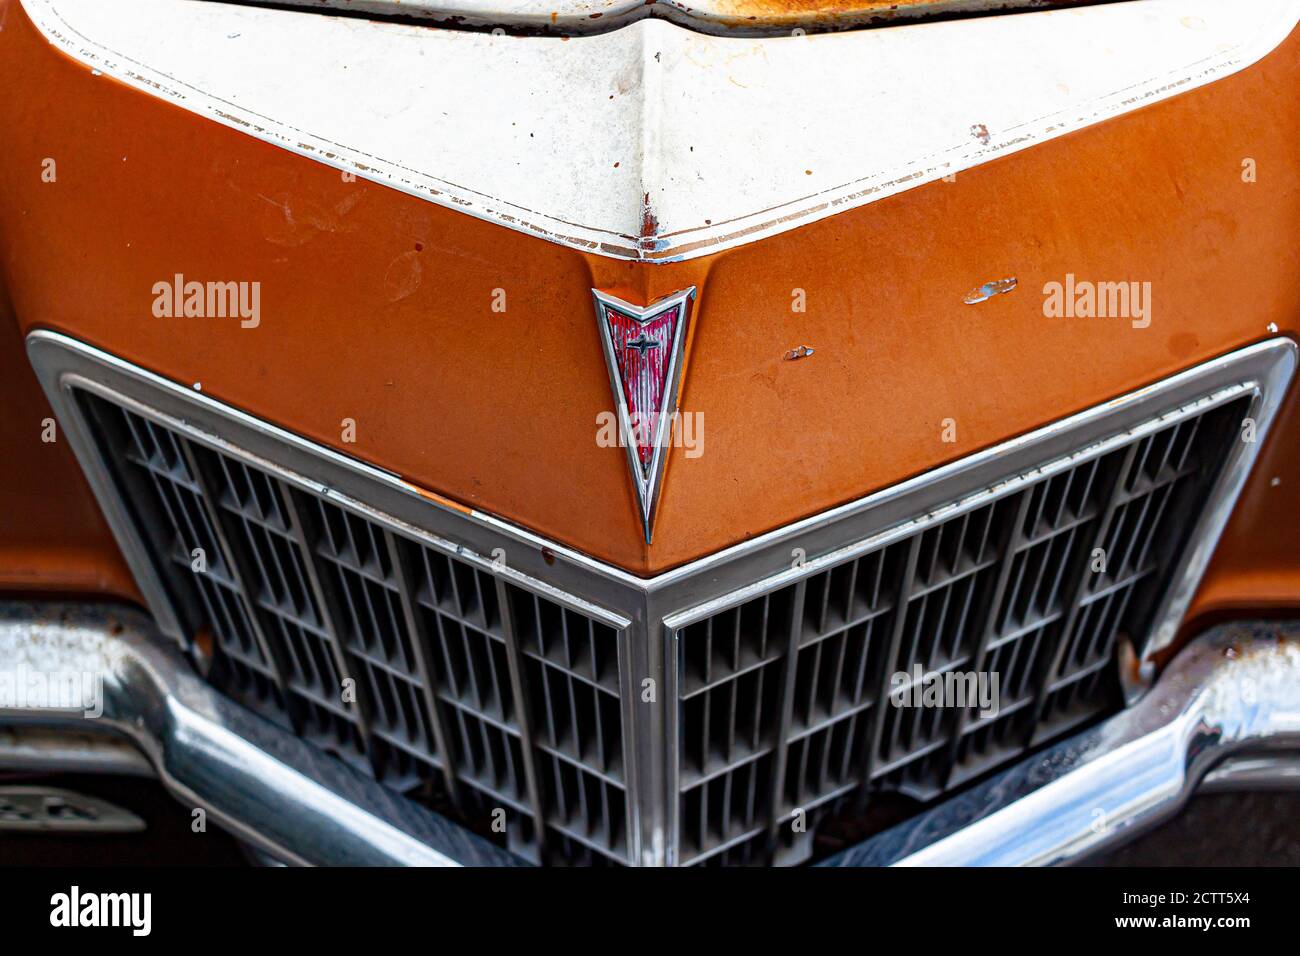 Rockville, MD, USA 09/12/2020: Close up image of the arrow head Pontiac car emblem on the front panel of an orange third generation Pontiac Grand Prix Stock Photo